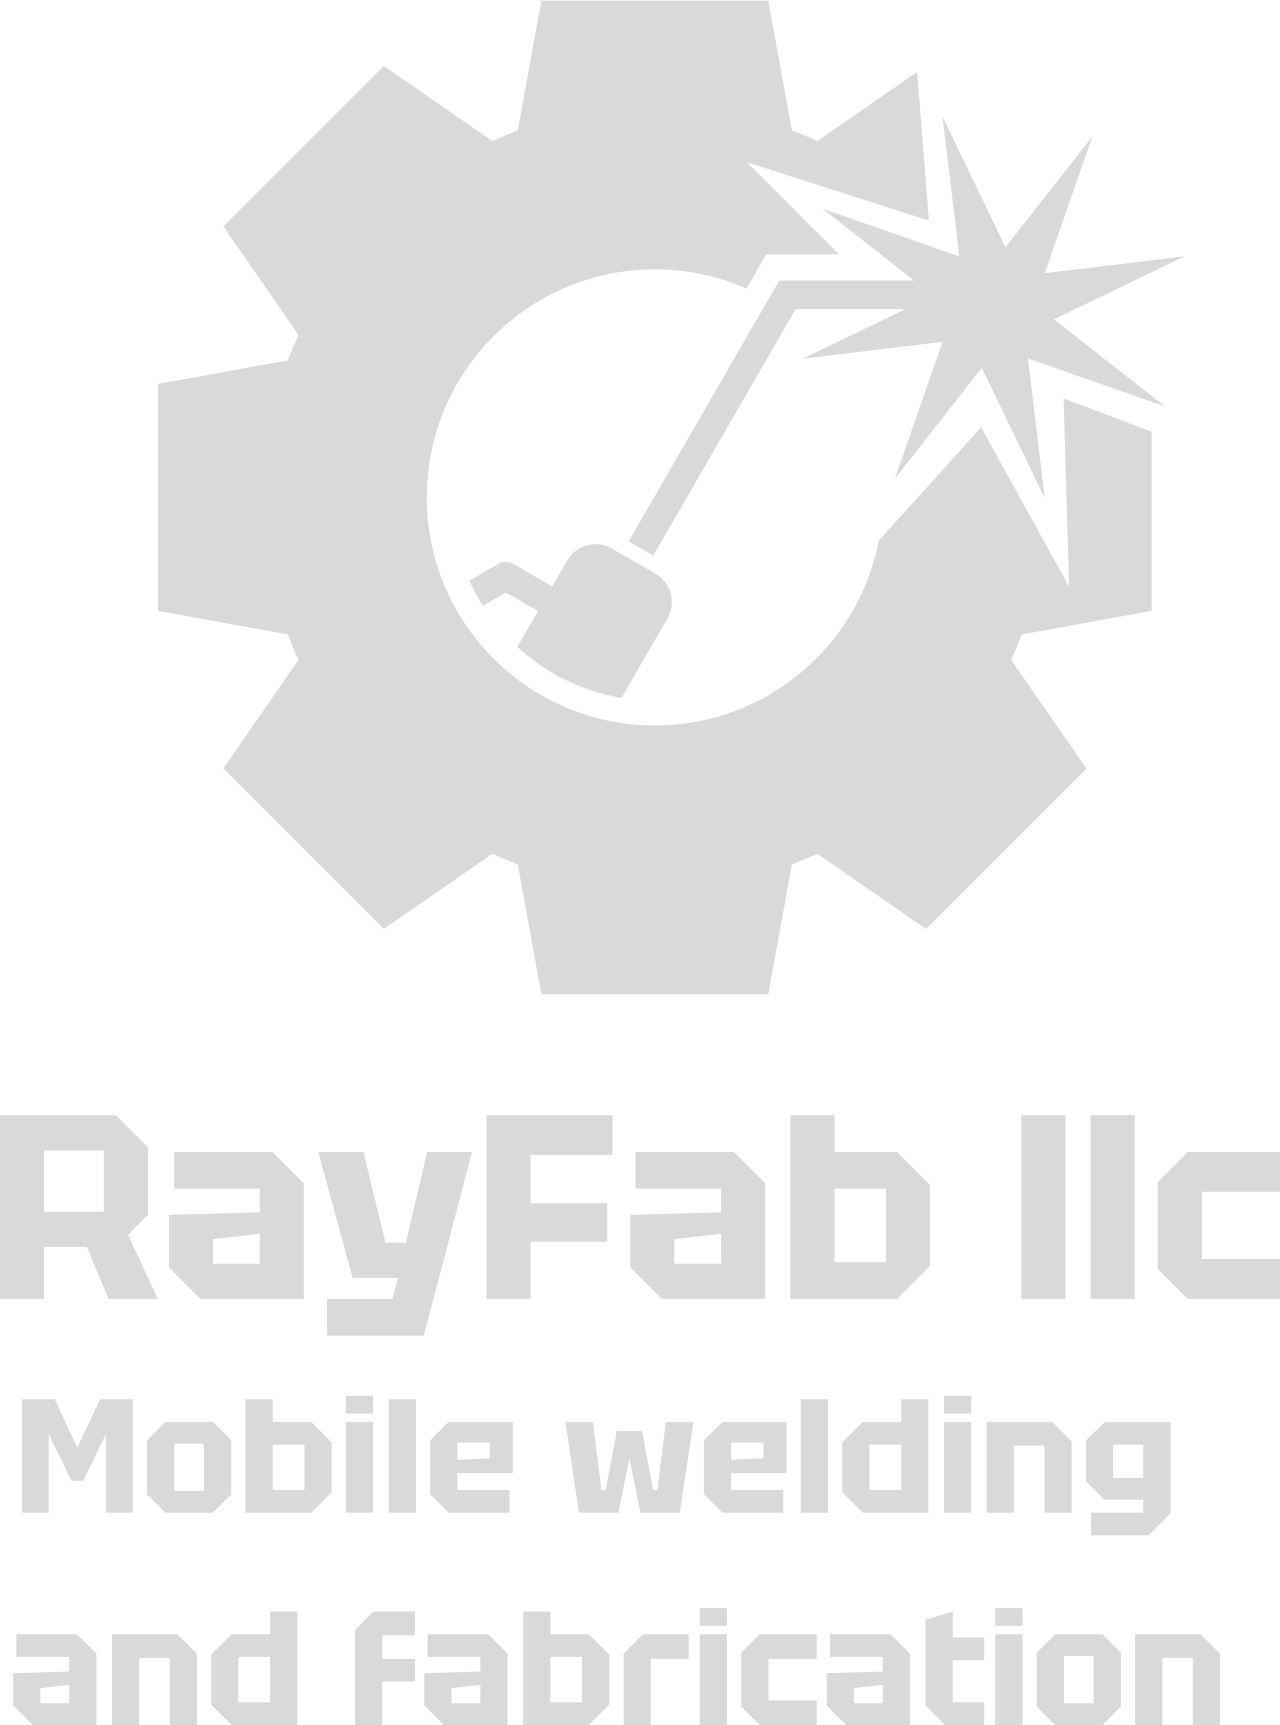 RayFab llc 's web page